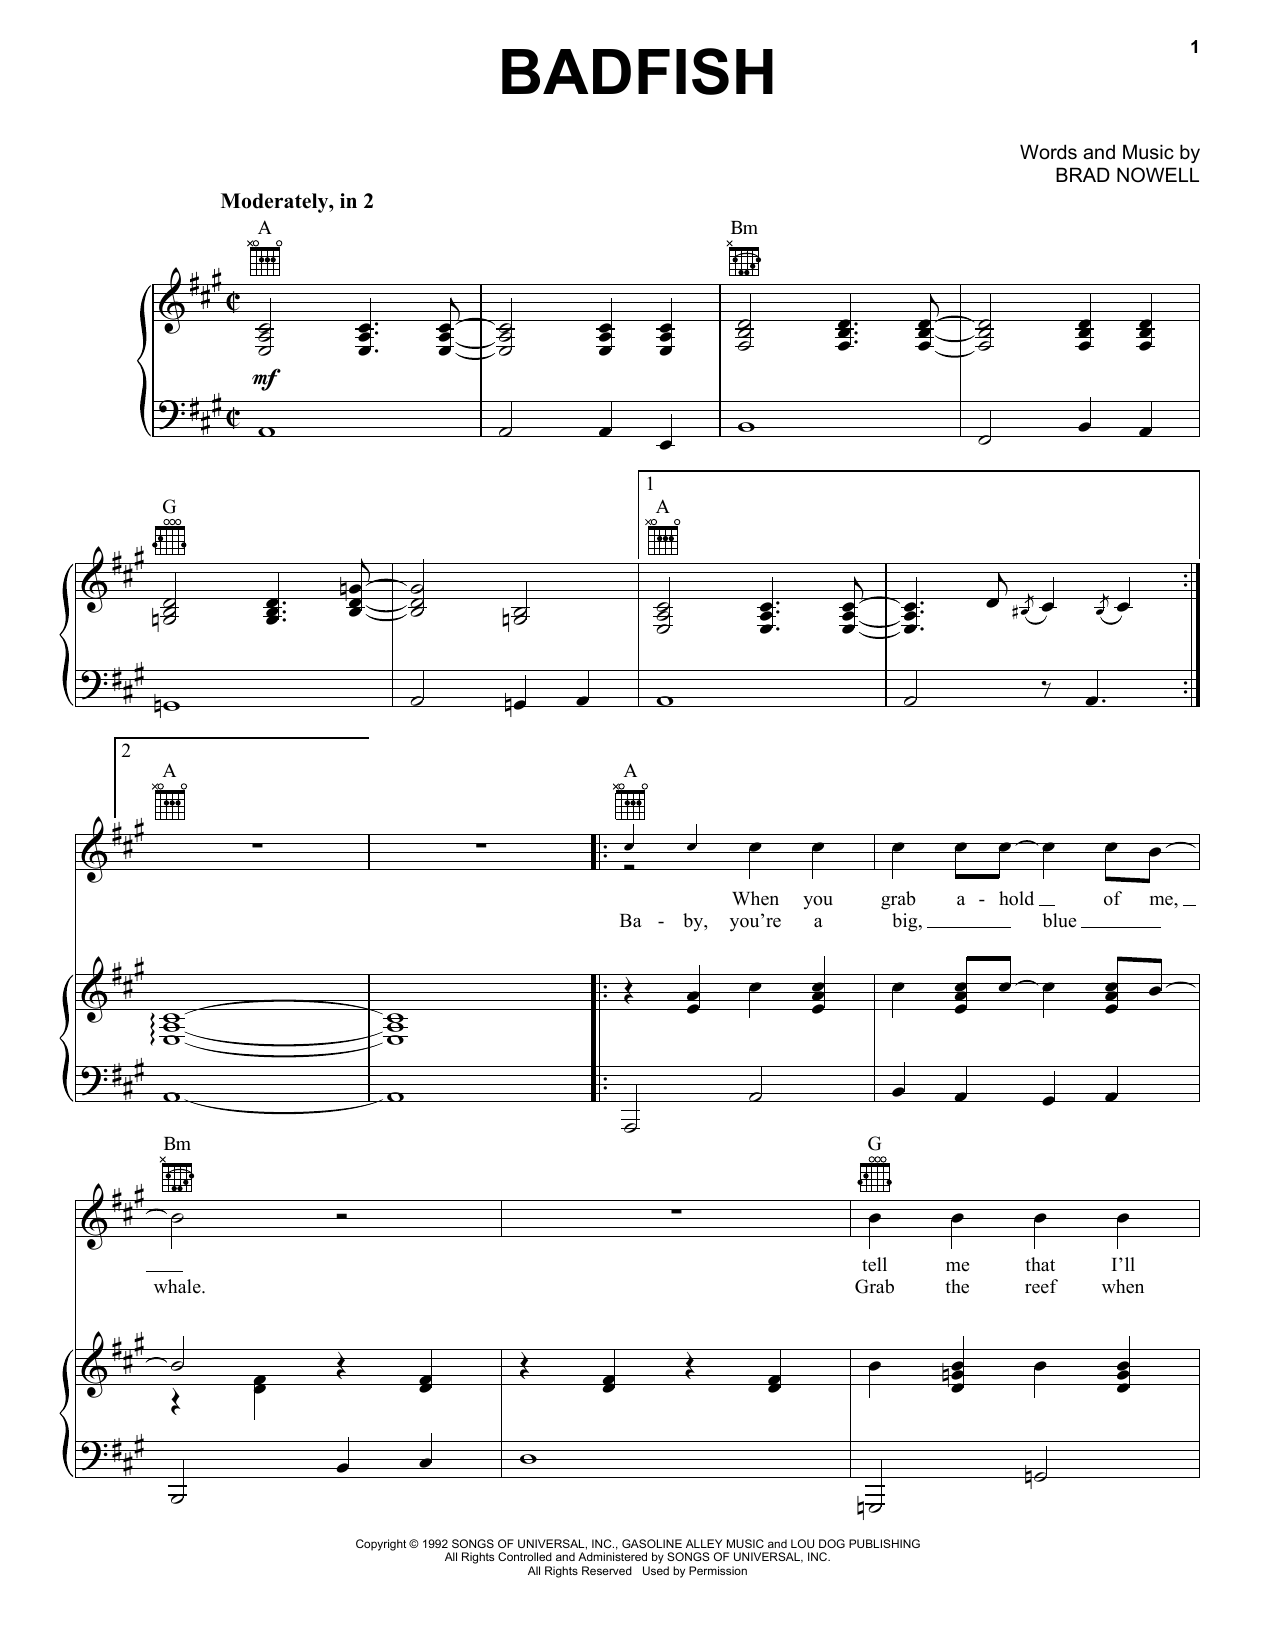 Sublime Badfish Sheet Music Notes & Chords for Ukulele - Download or Print PDF